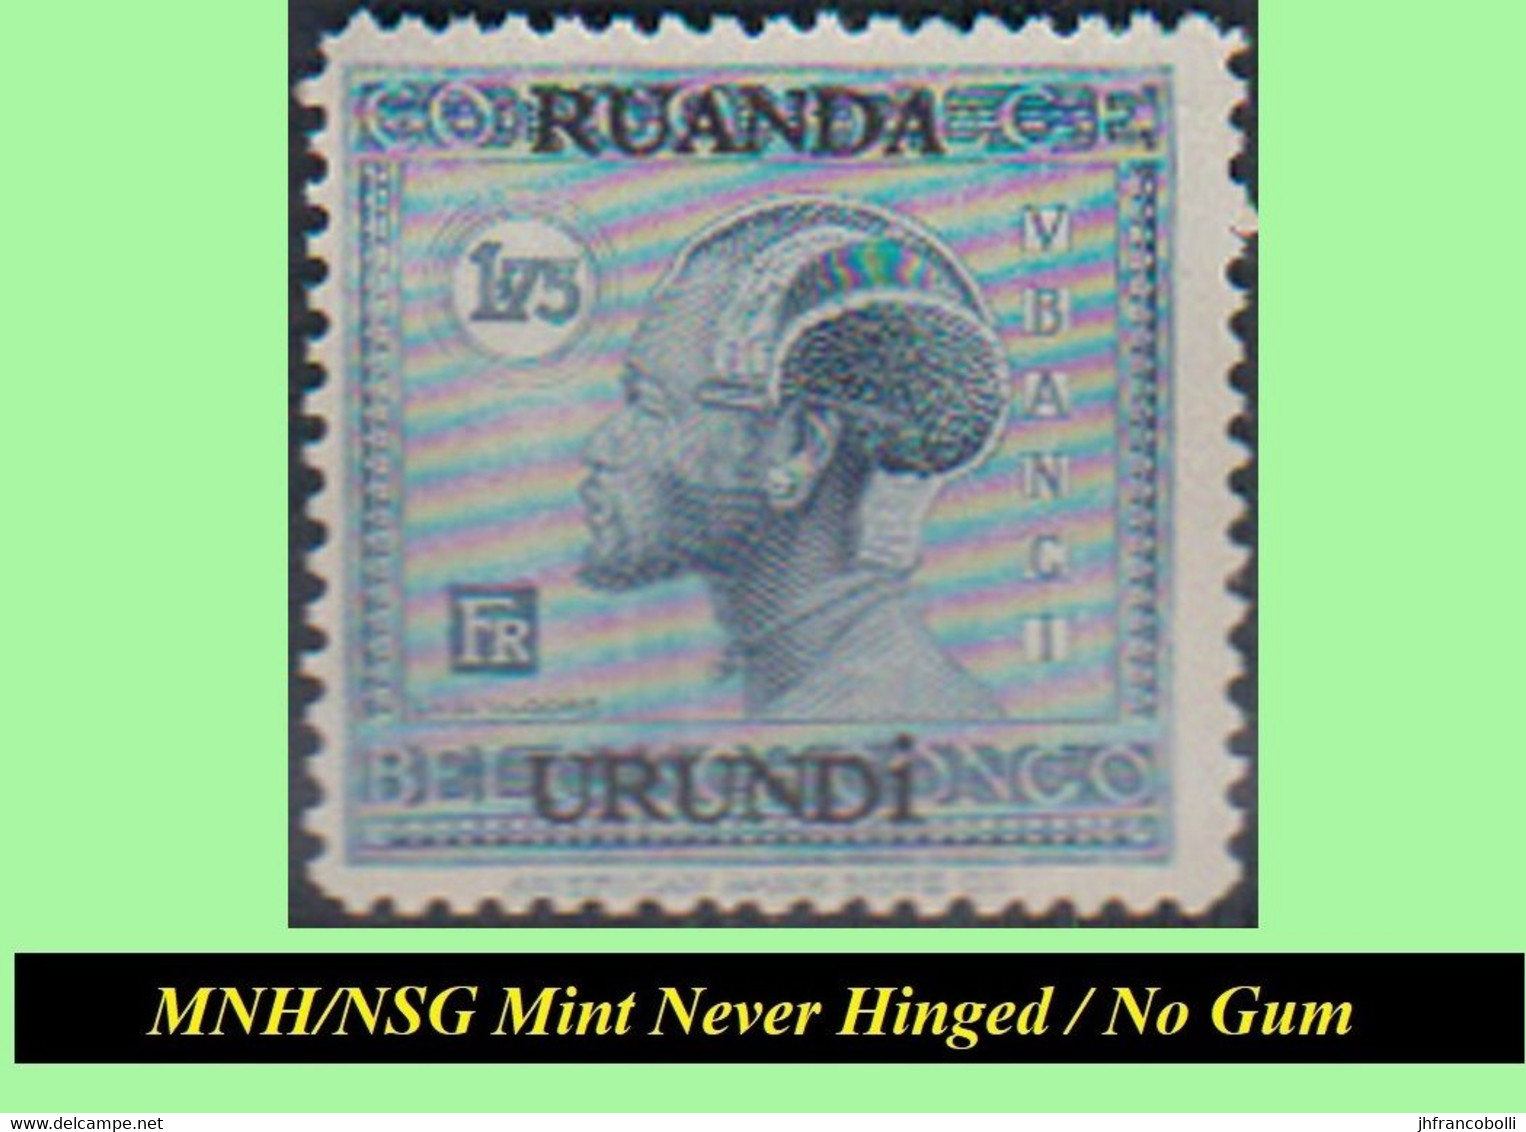 1924+25 ** RUANDA-URUNDI RU 050/060 MNH/NSG SMALL VLOORS [G] SELECTION  ( x 12 stamps ) [ NO GUM ] INCLUDING RU 075